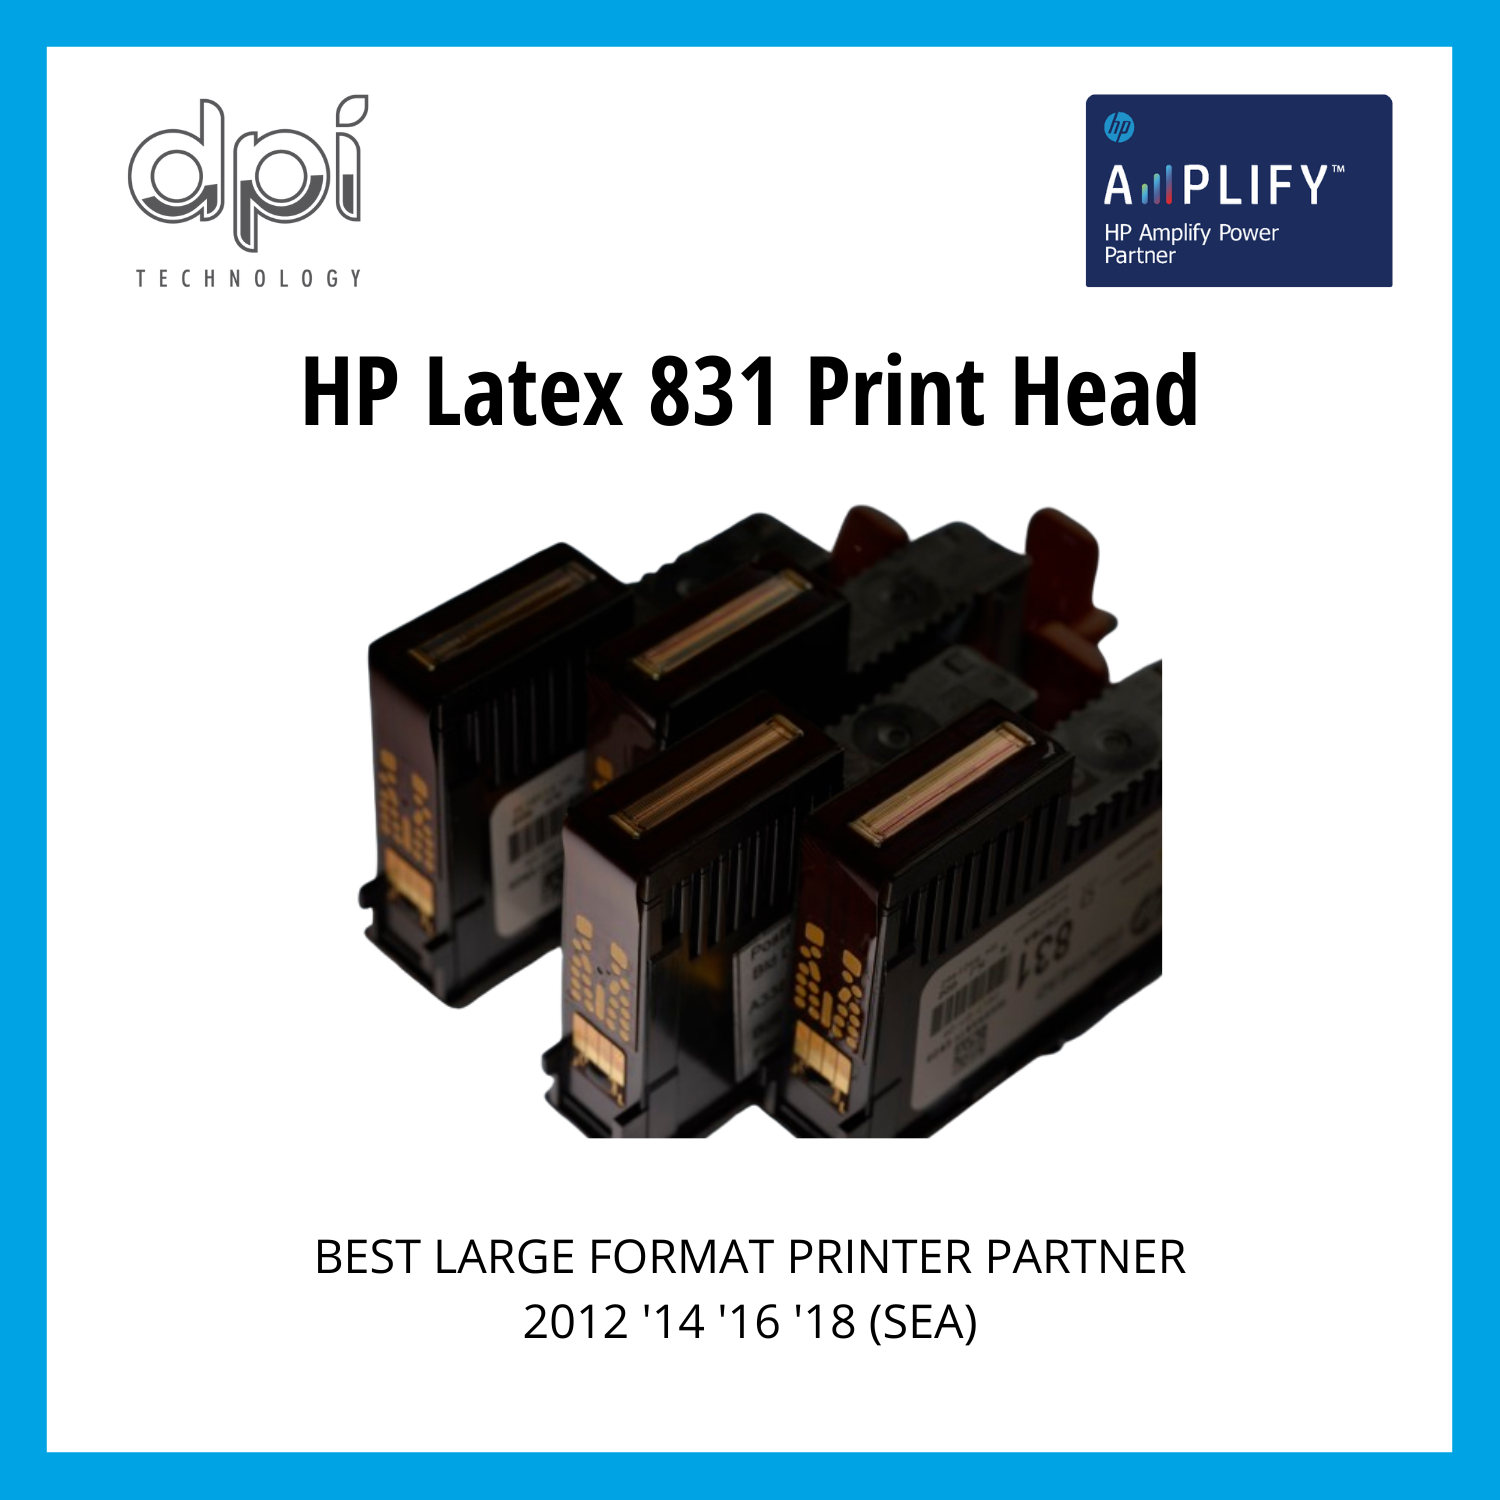 HP Latex 831 Print Head